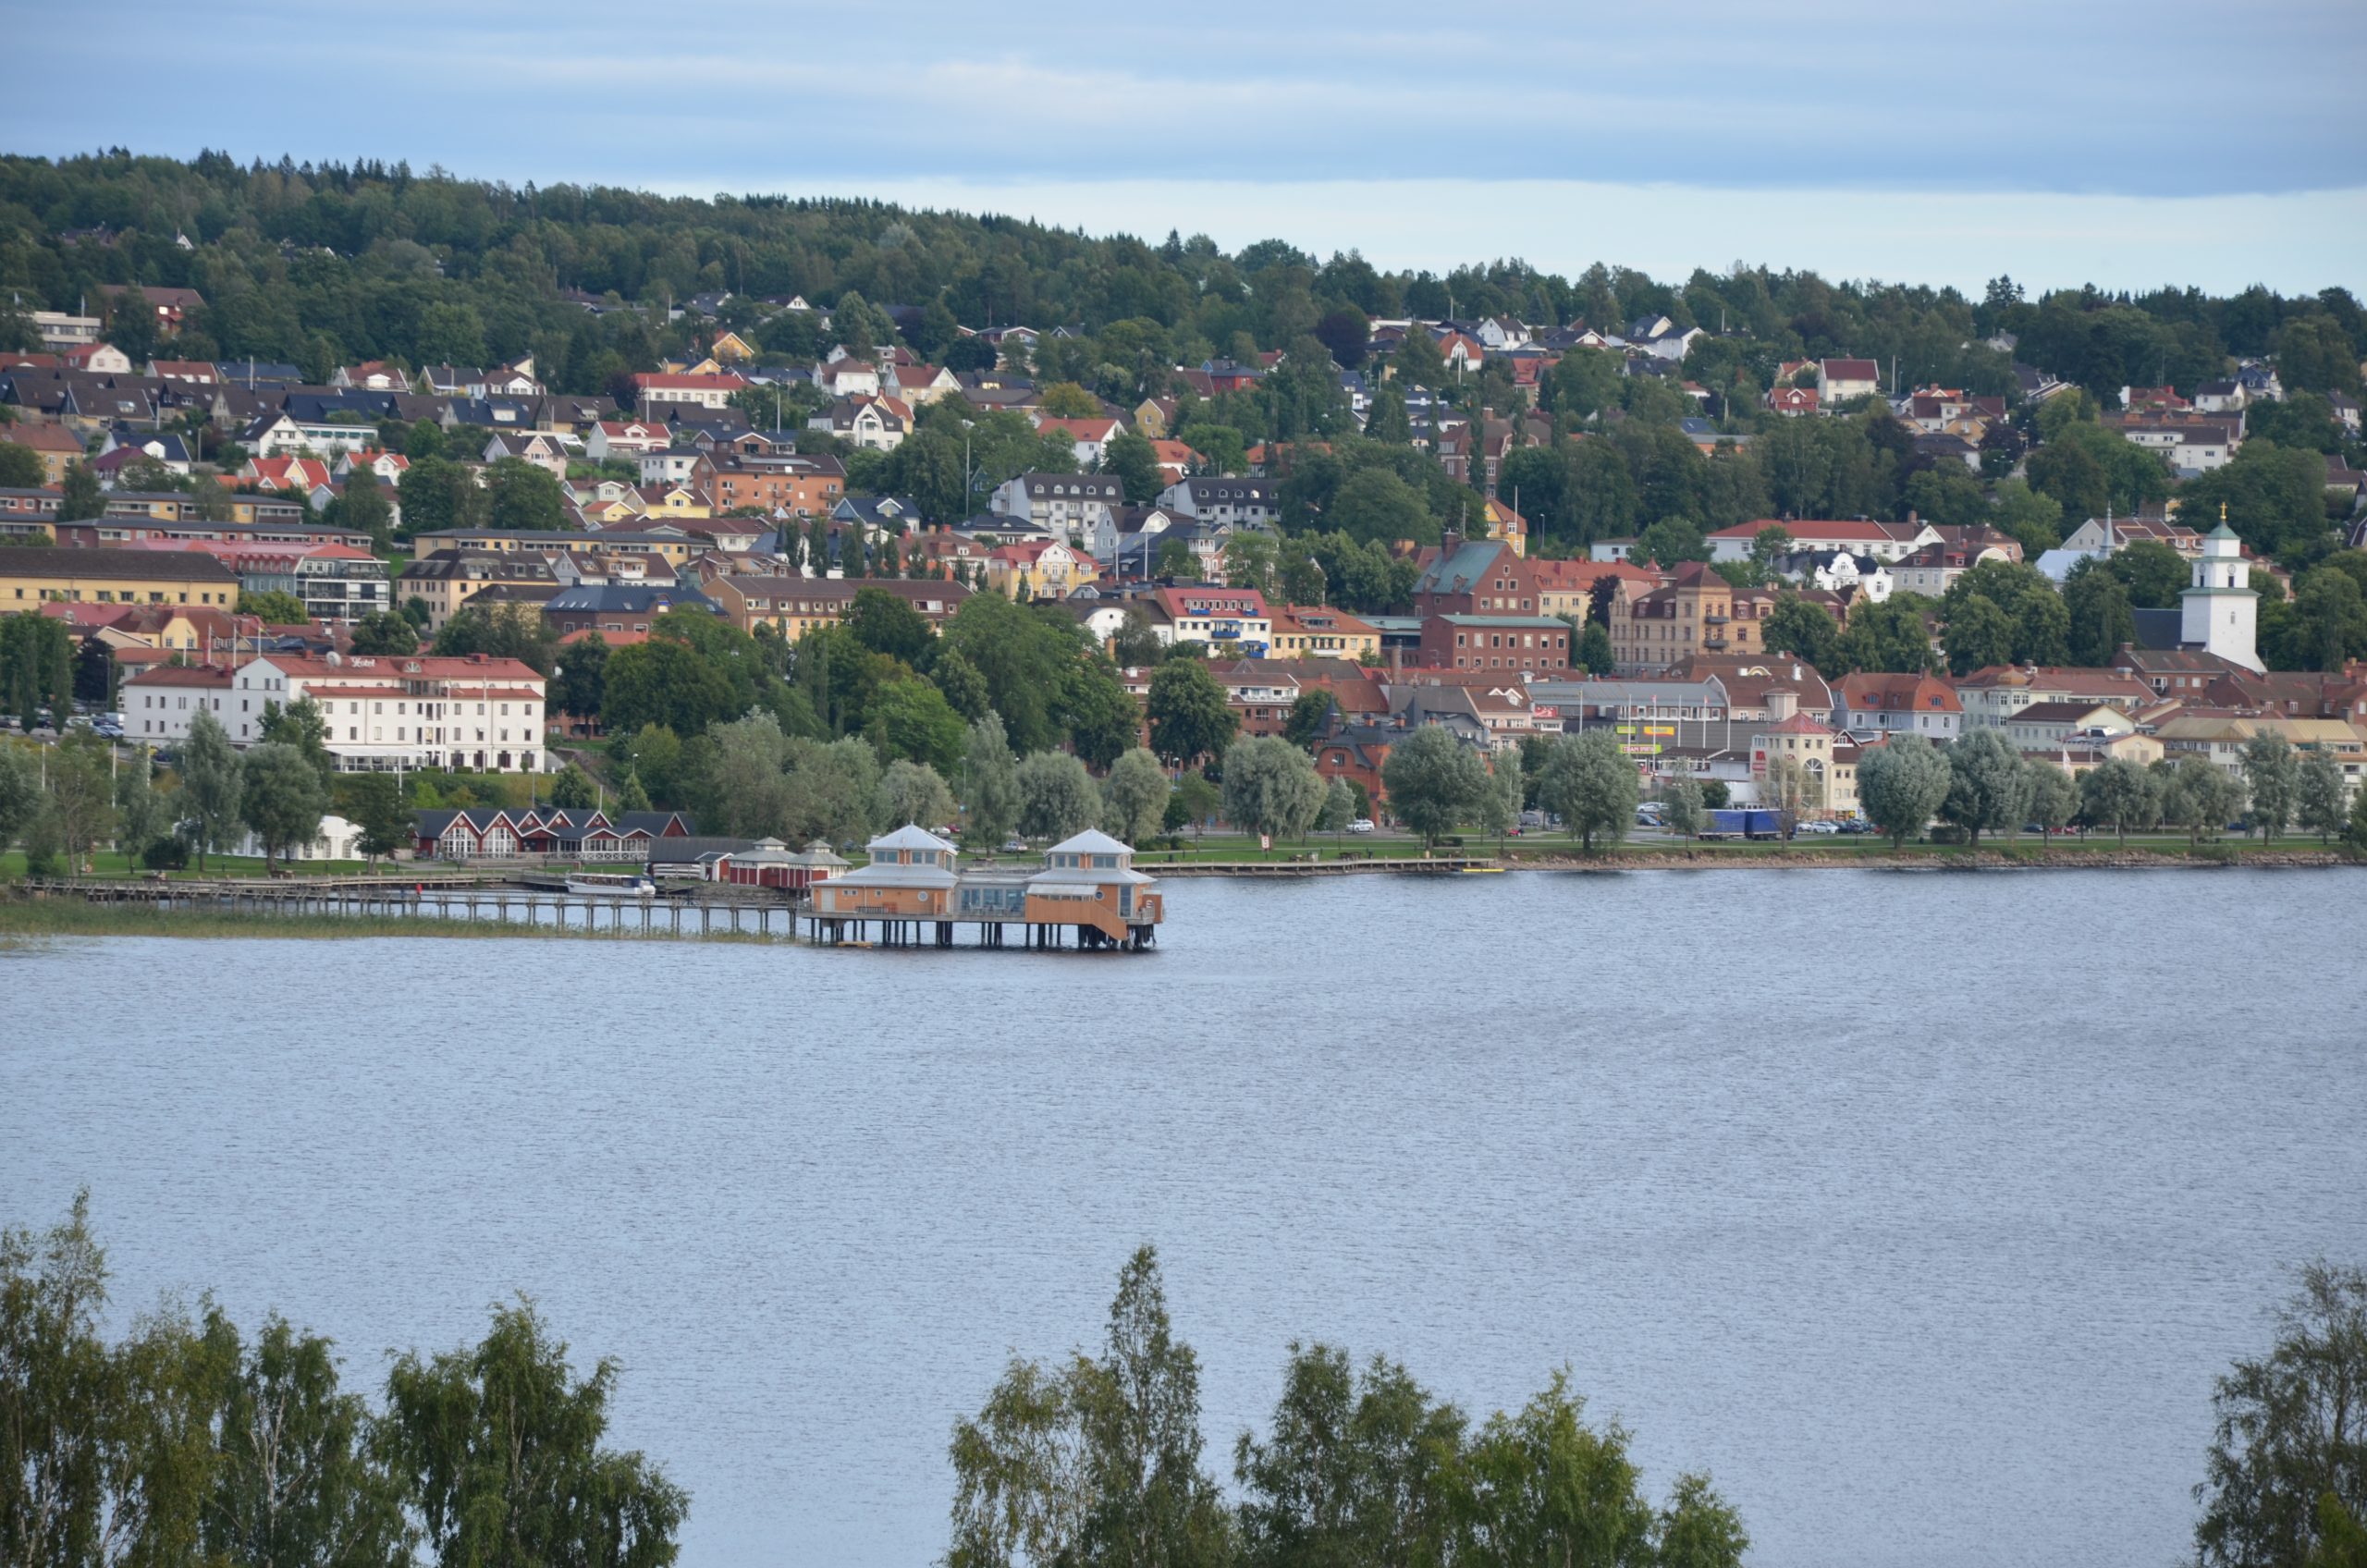 Staden och kommunen — Ulricehamns kommun